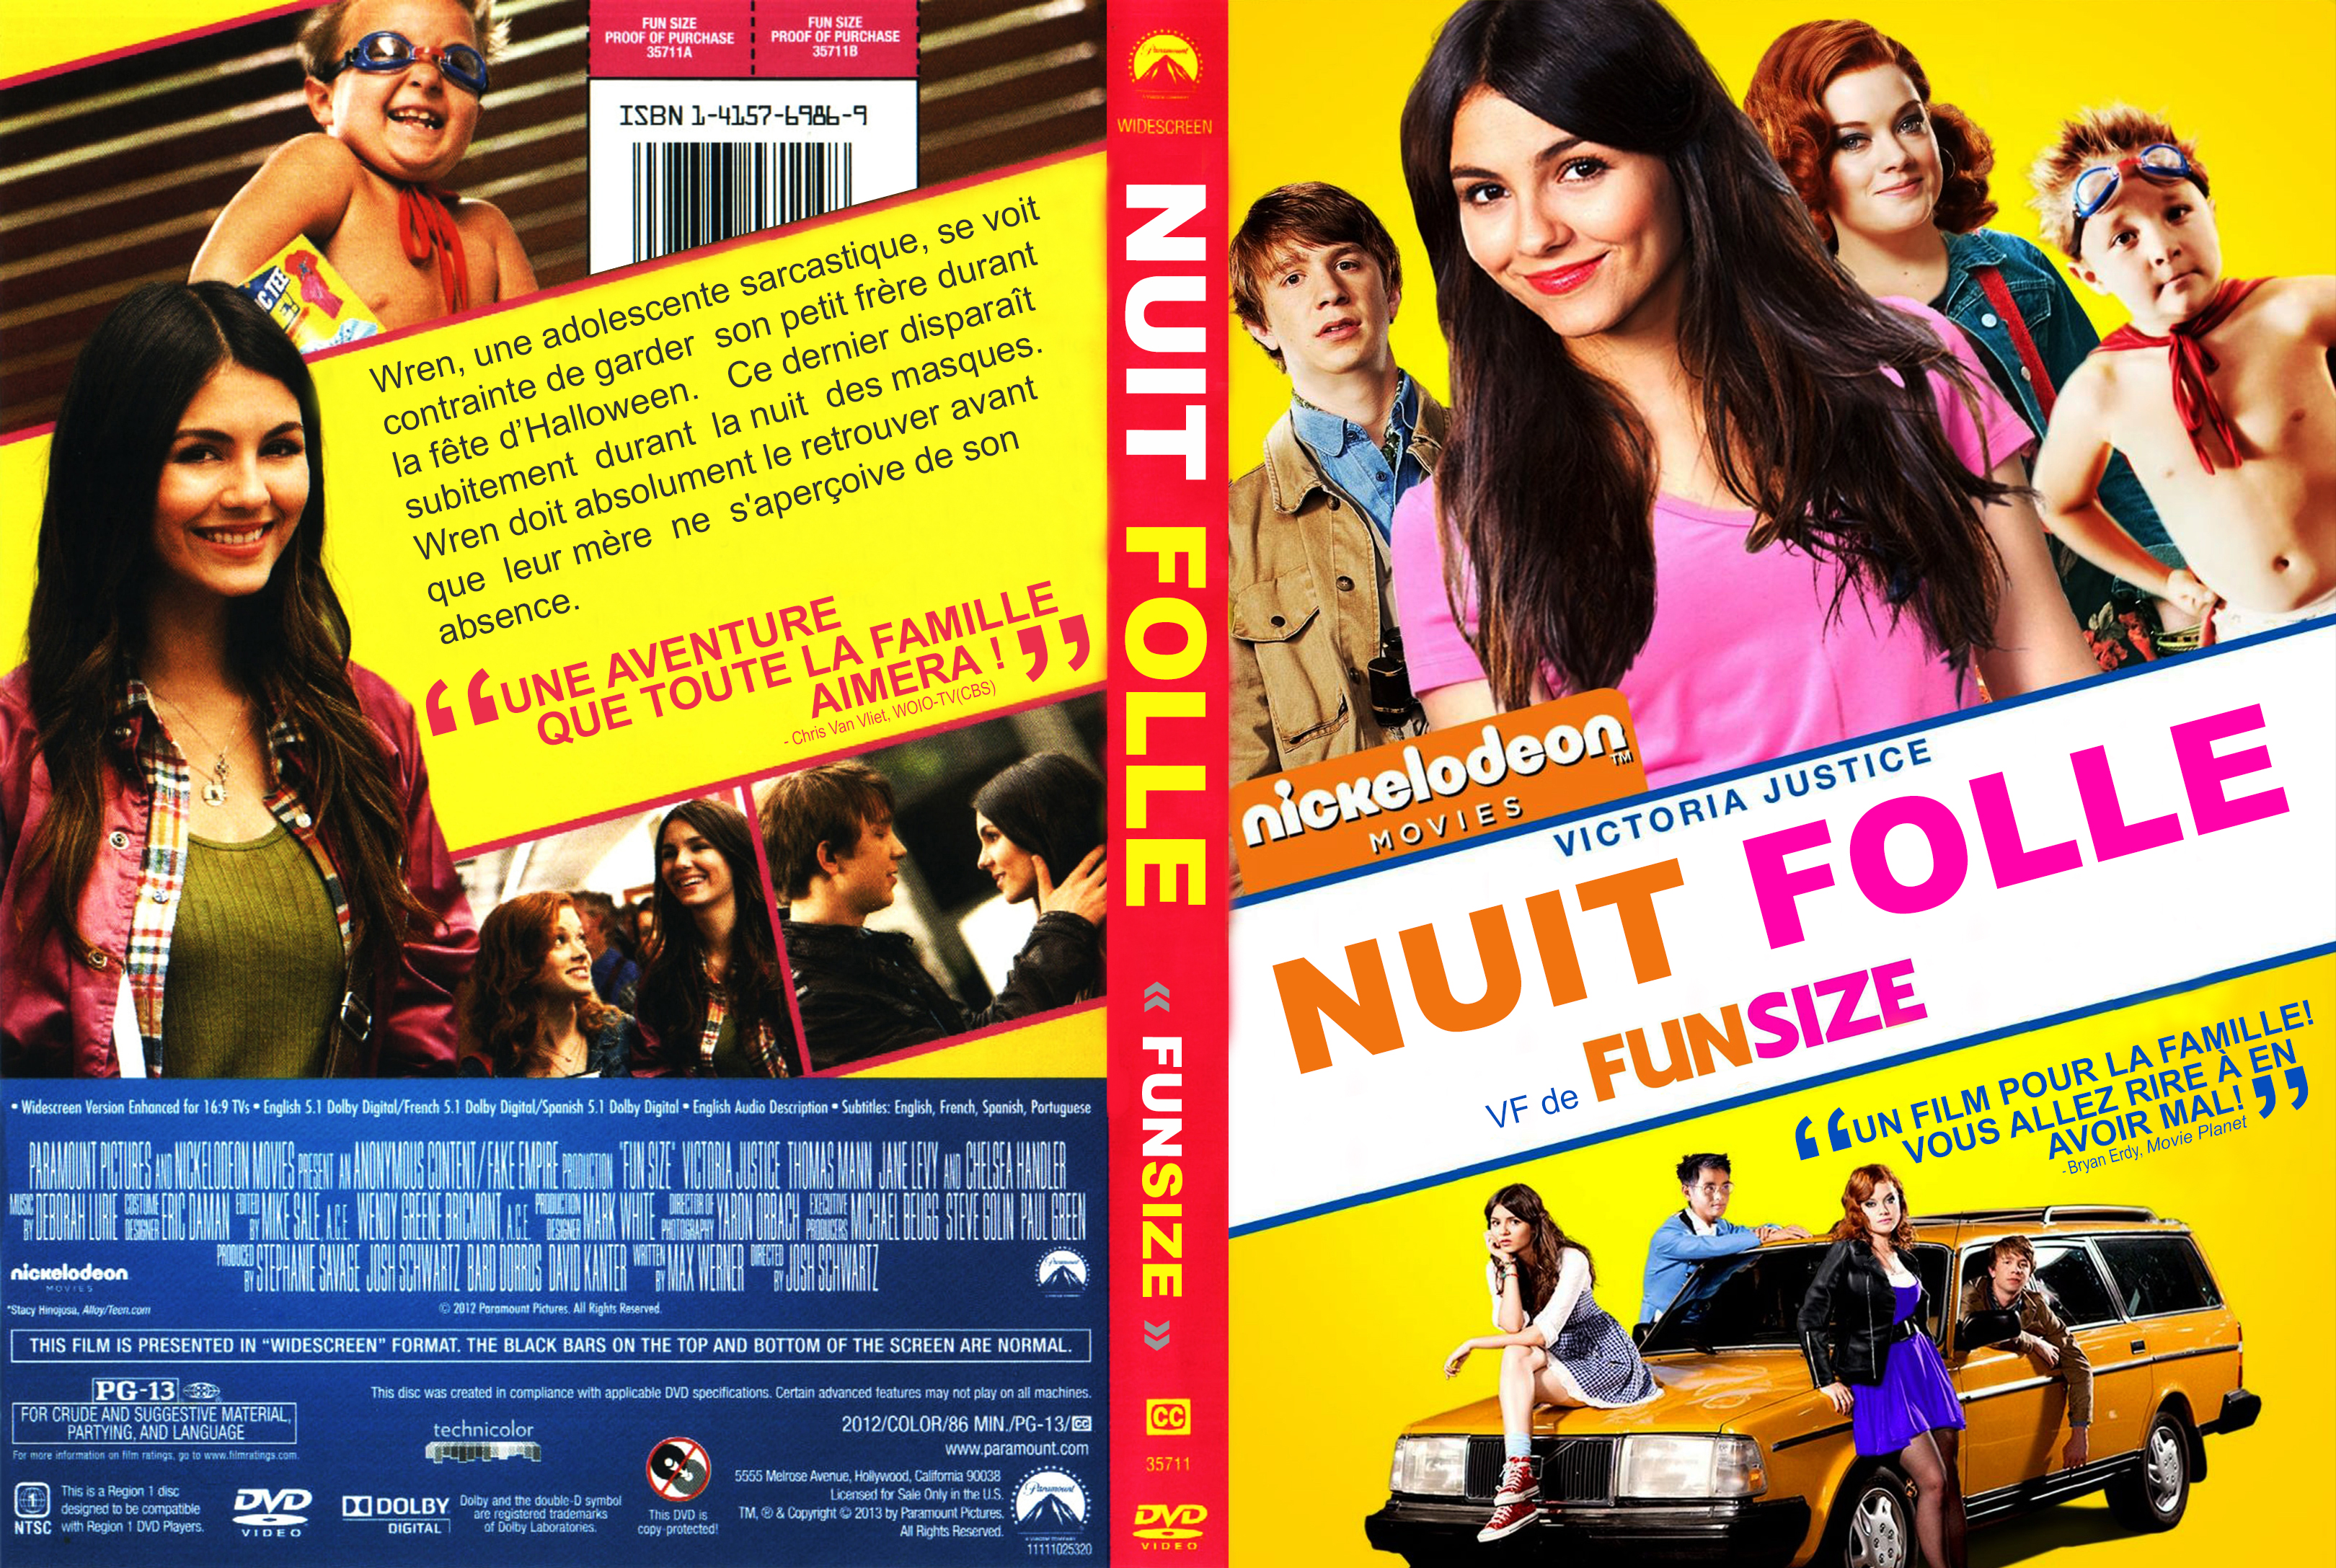 Jaquette DVD Nuit Folle custom